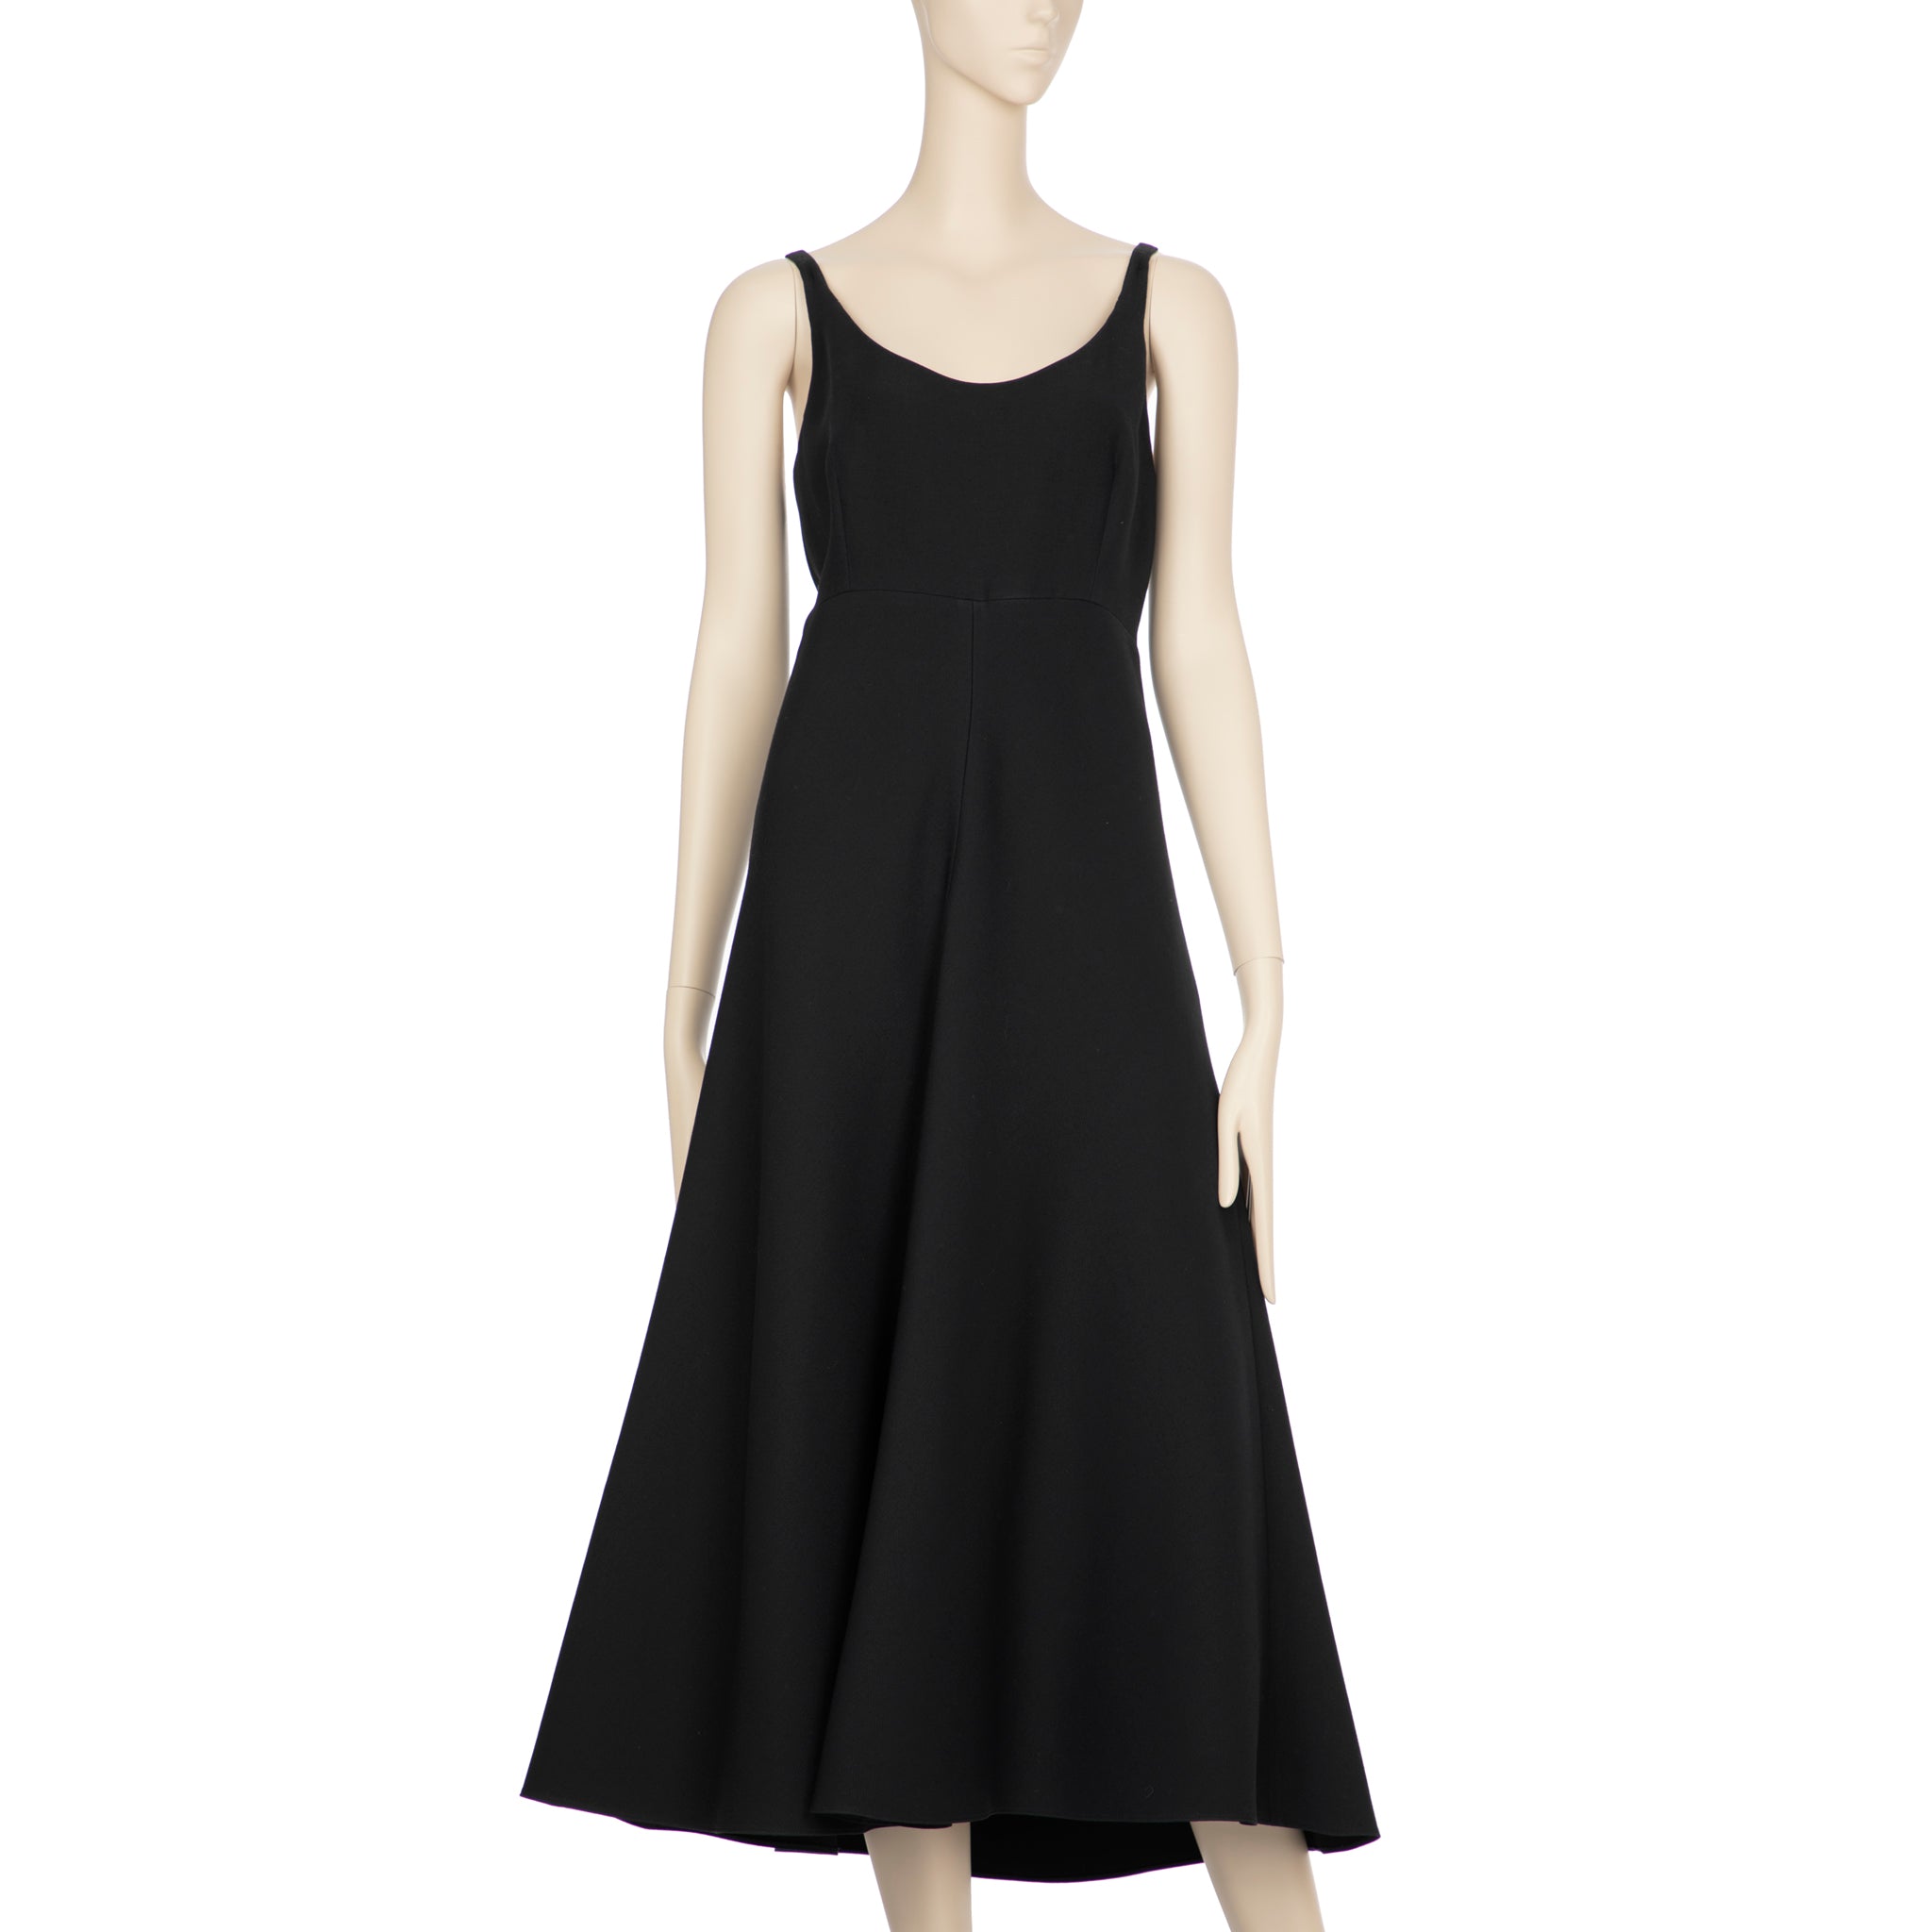 Christian Dior Black Fitted Dress 40 FR